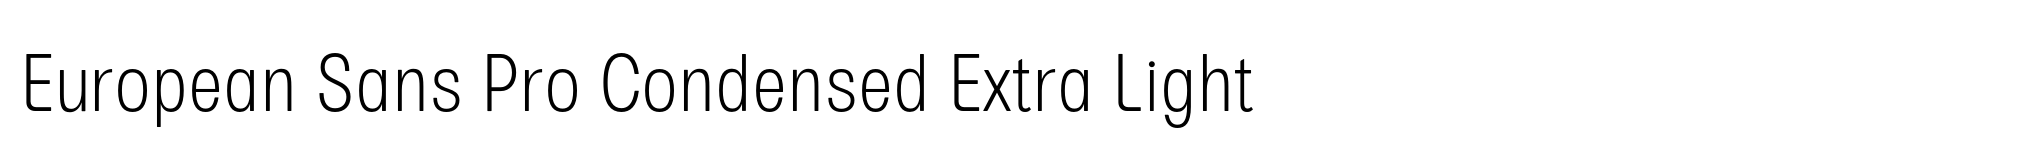 European Sans Pro Condensed Extra Light image